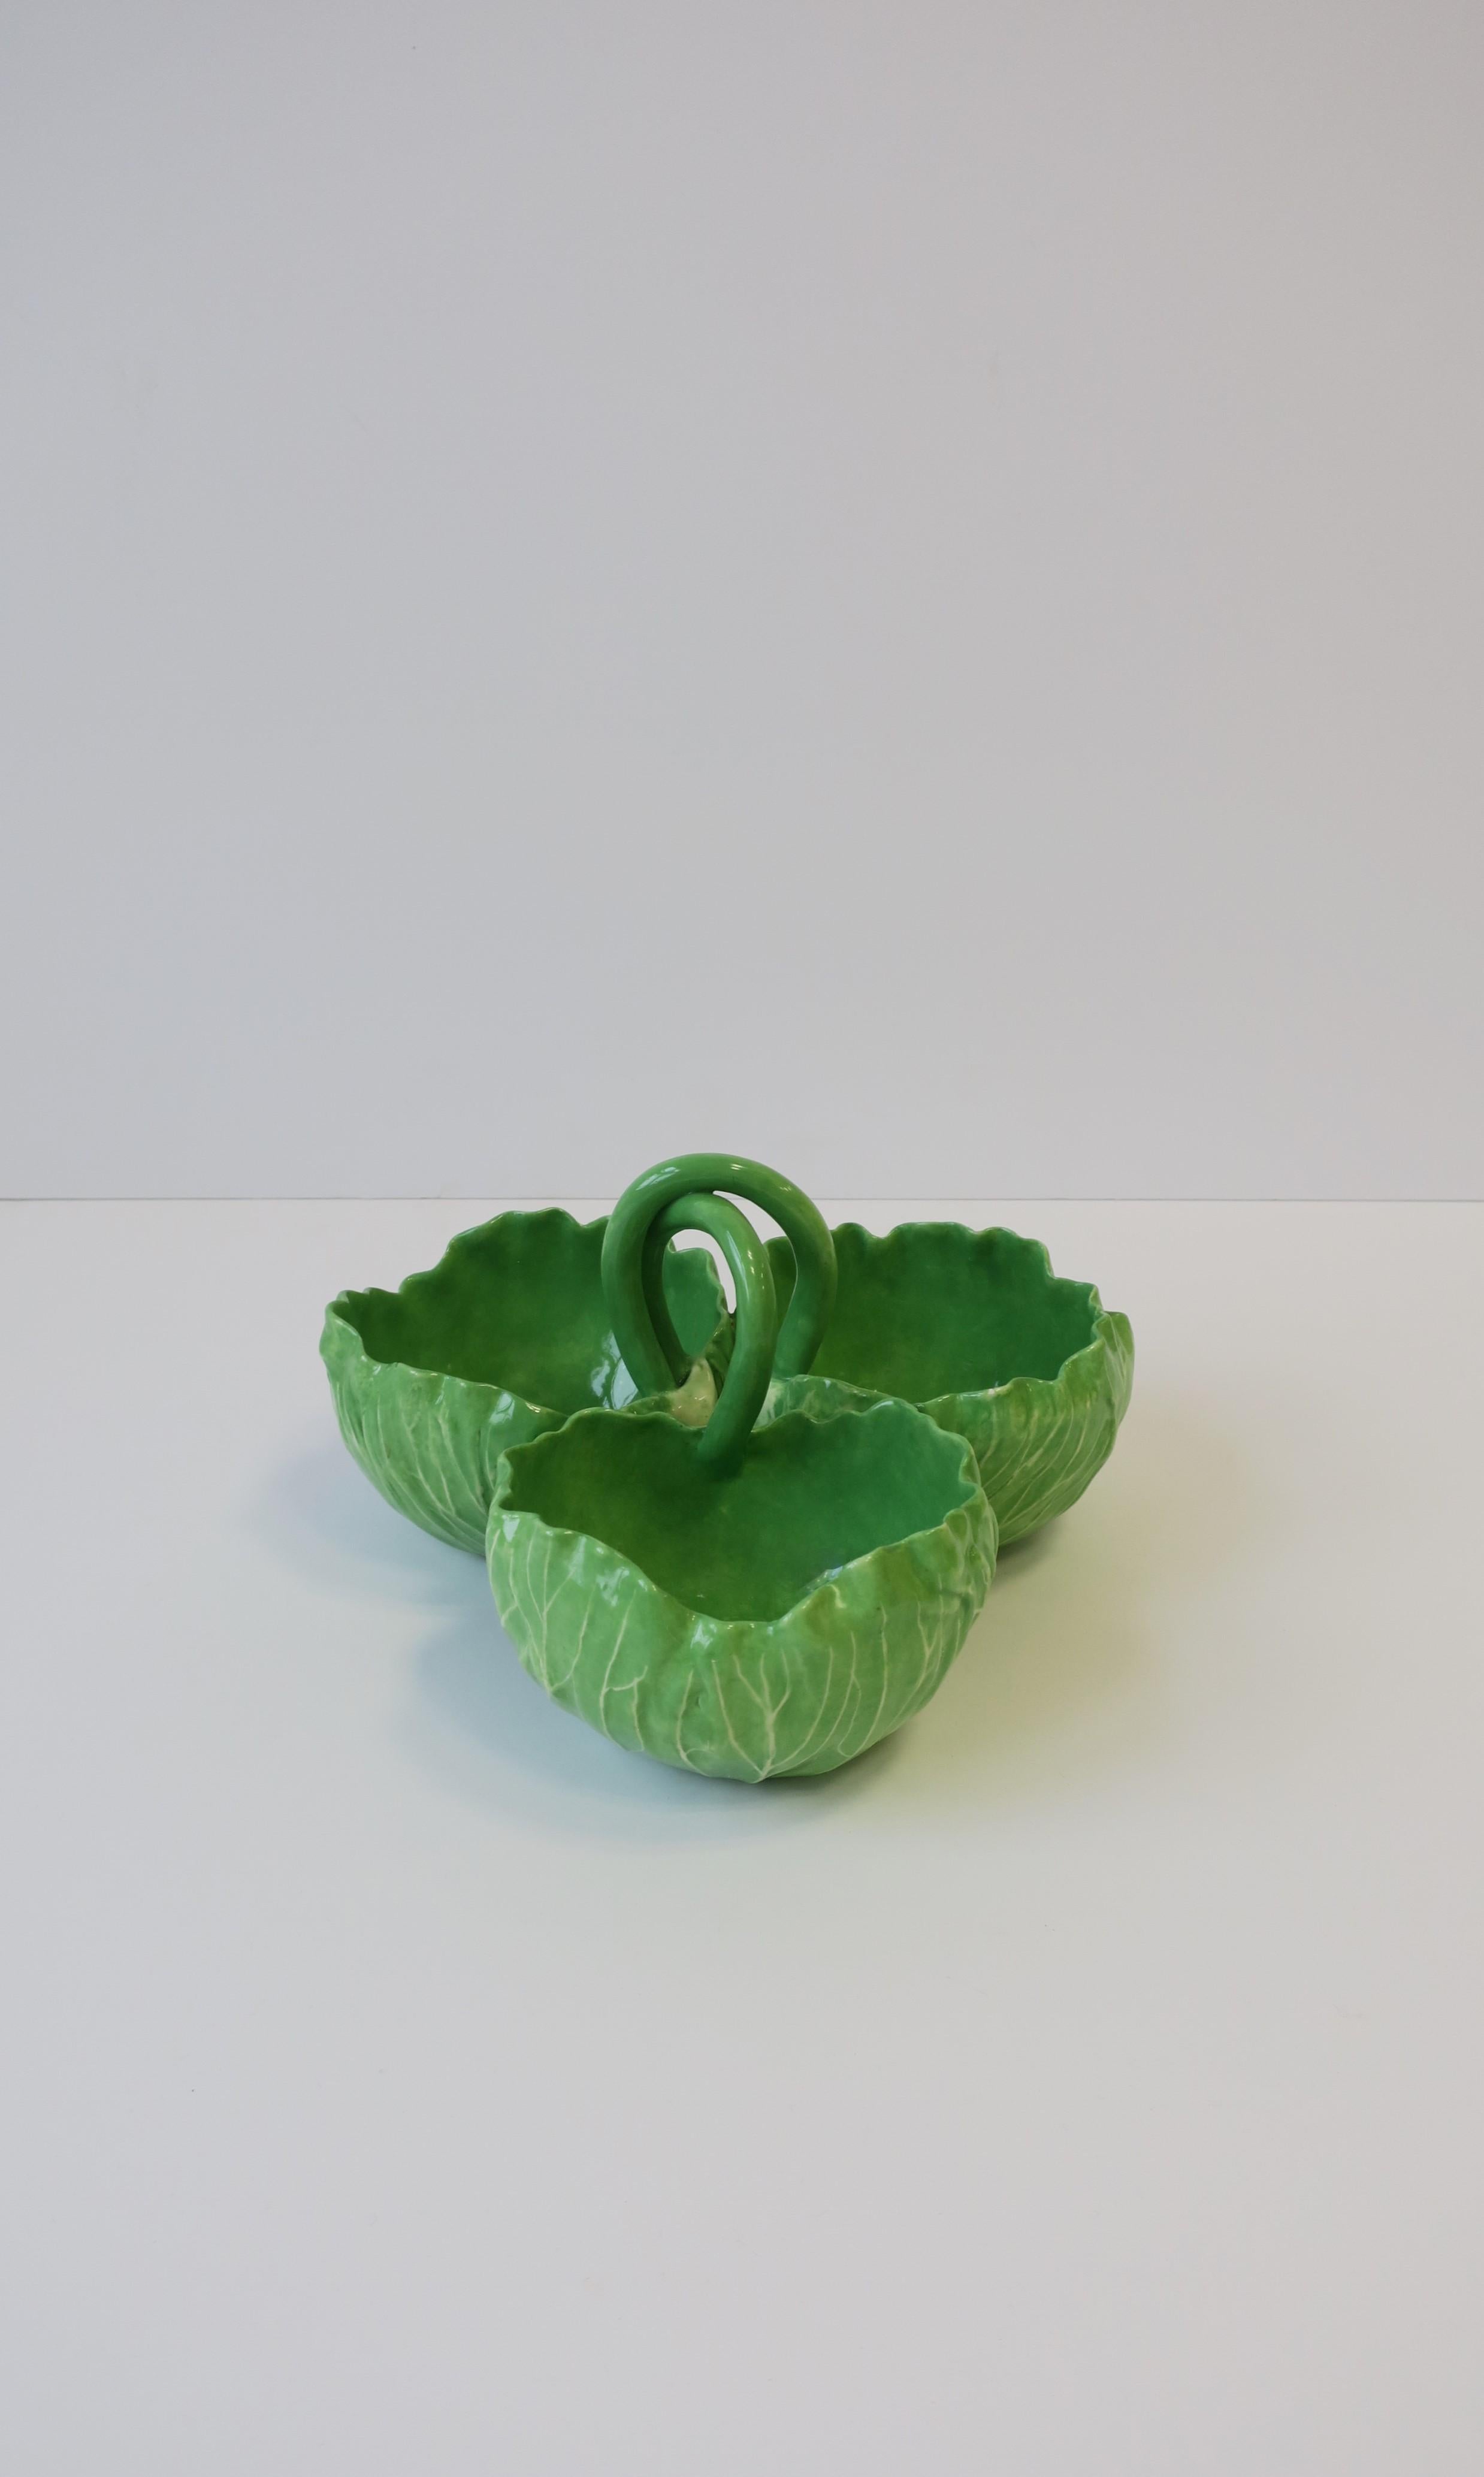 Glazed Signed Lettuceware Pottery Dish by Designer Dodie Thayer